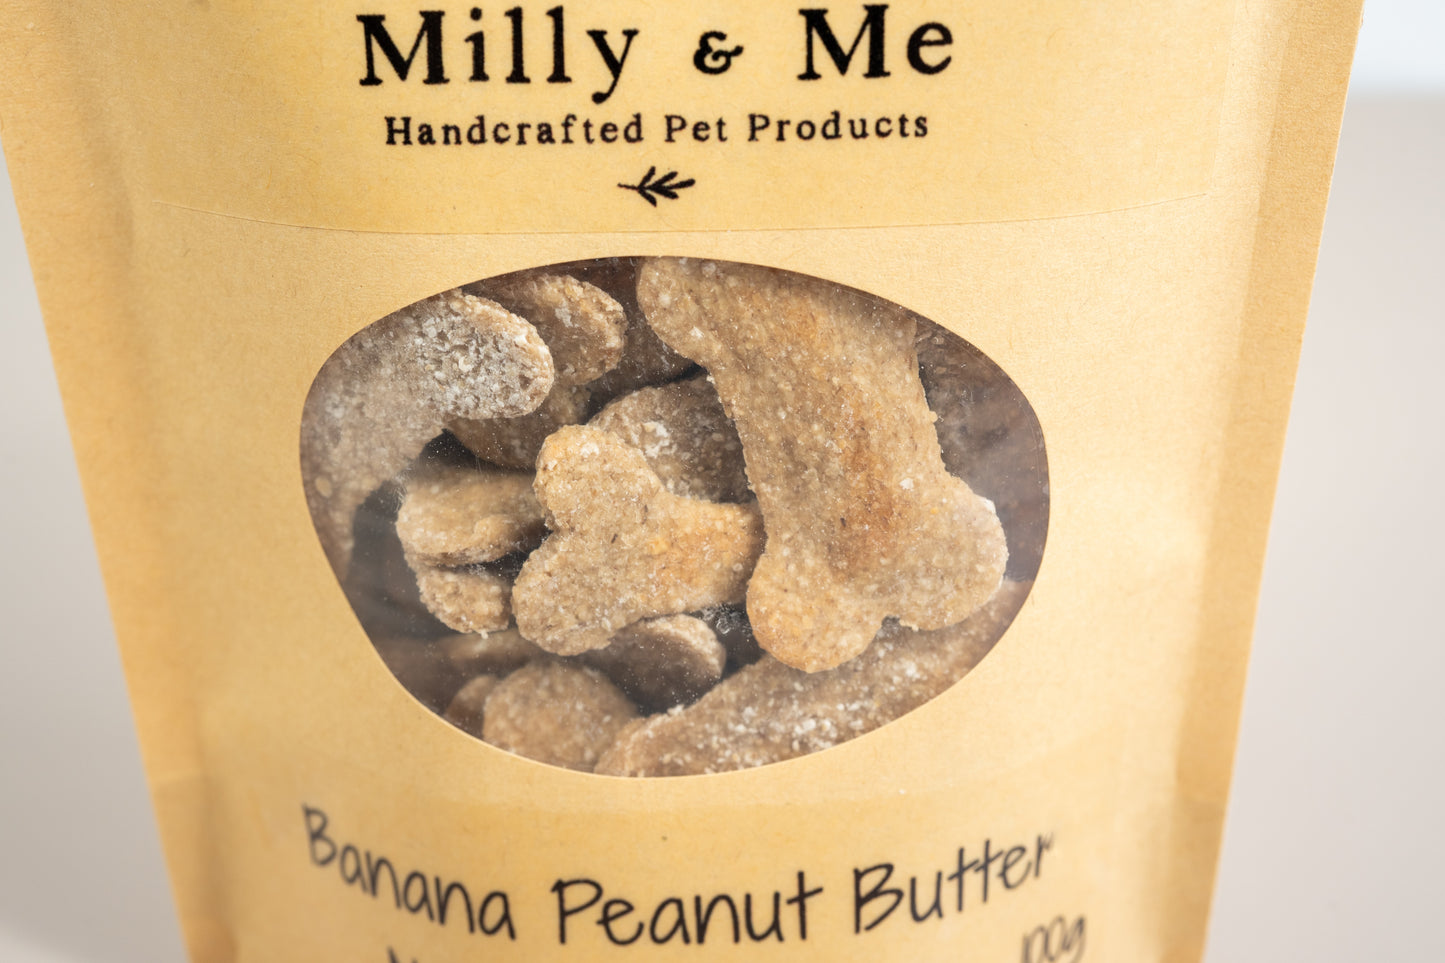 Close-up view of the banana peanut butter dog treats.